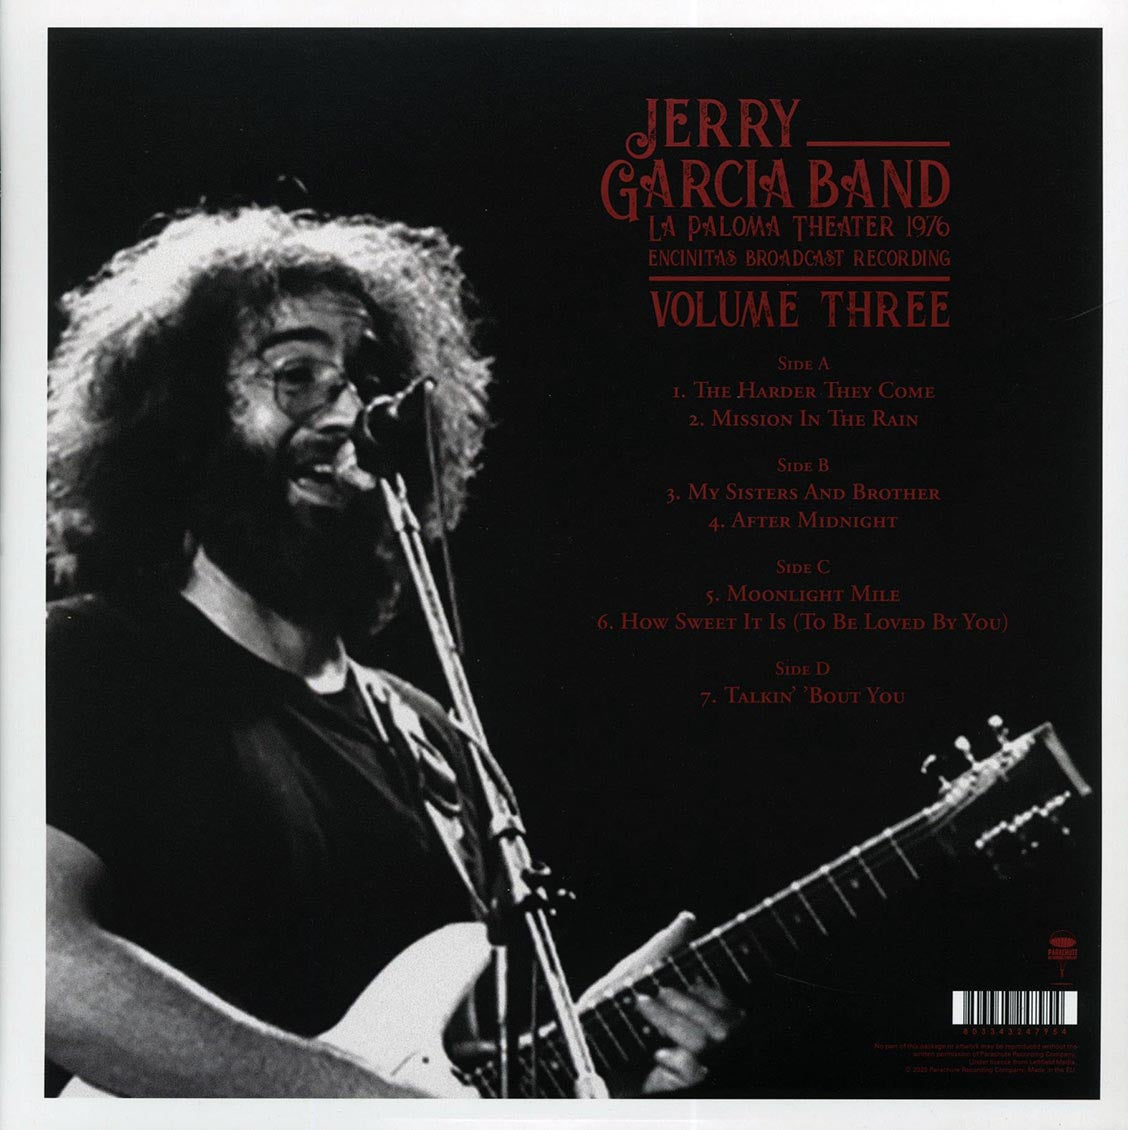 The Jerry Garcia Band - La Paloma Theater 1976 Volume 3: Encinitas Broadcast Recording